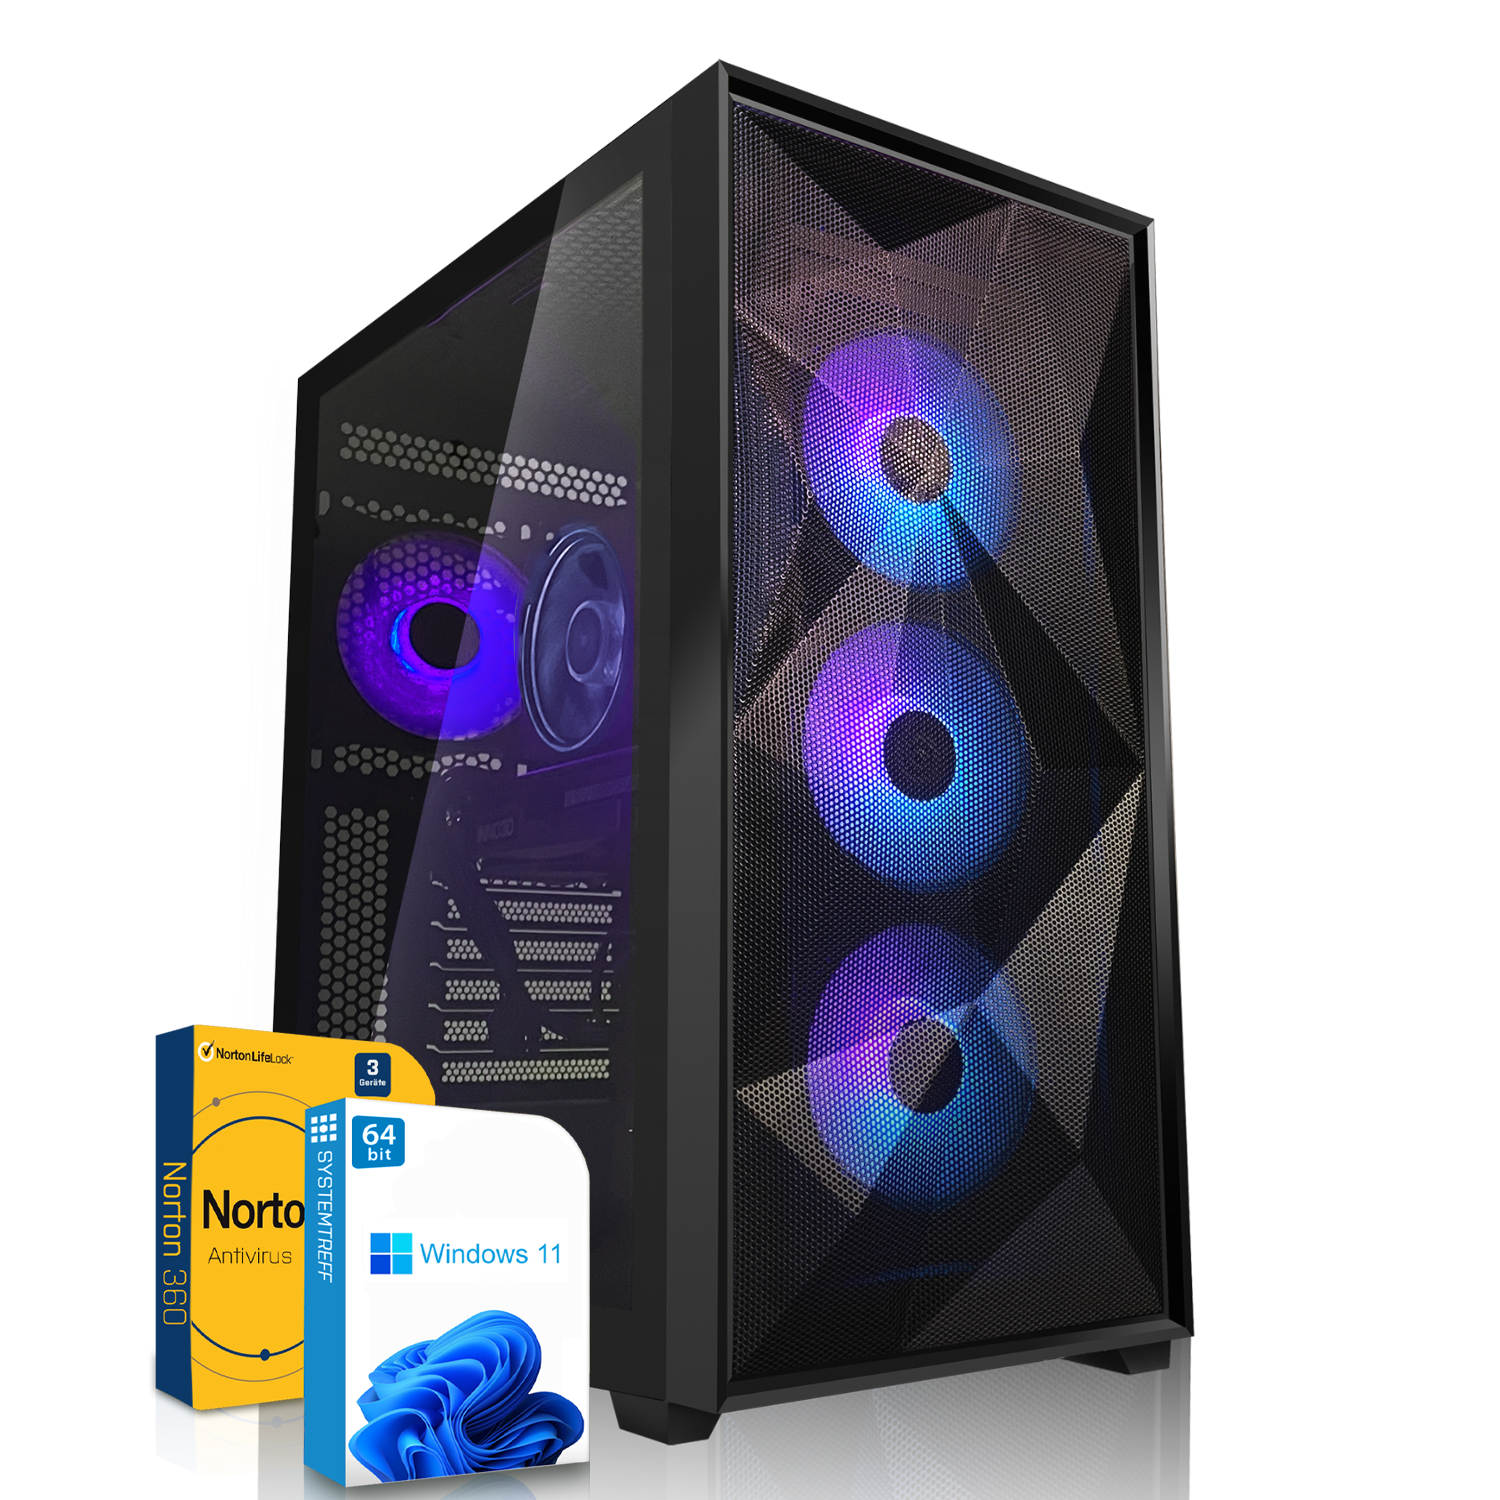 SYSTEMTREFF Pro Gaming AMD Ryzen GB NVIDIA mSSD, mit 1000 Gaming 4060 RAM, 32 7800X3D, 7 GeForce PC RTX™ 7 11 AMD Ti GB Windows Prozessor, Ryzen™ Pro